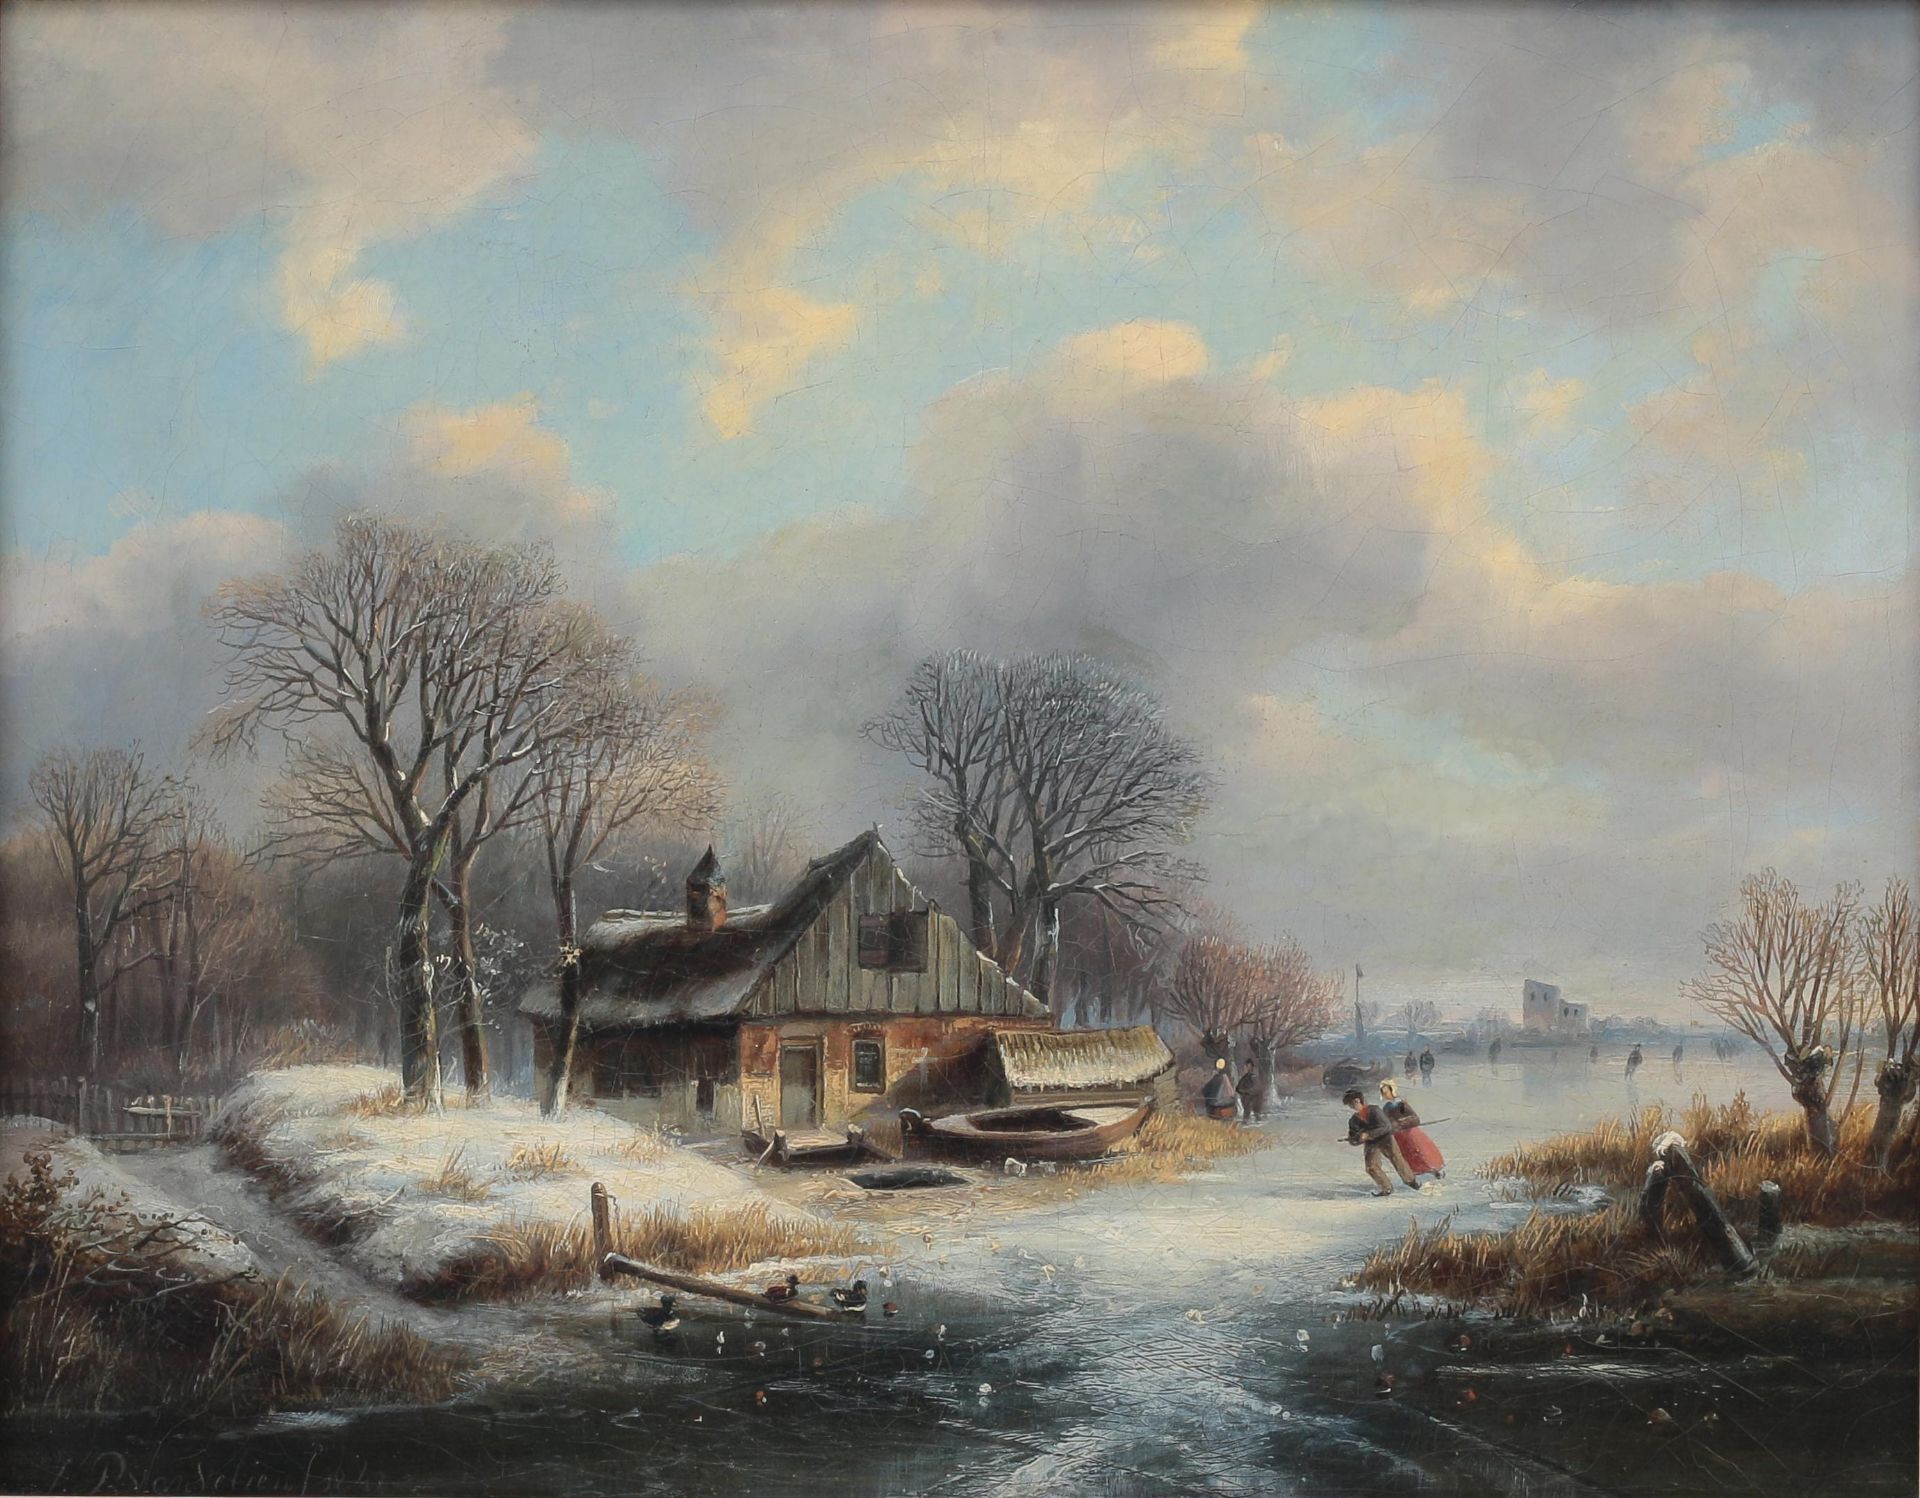 Johannes Petrus van Velzen (1816-1853) Winter landscape with ice skating figures on a frozen